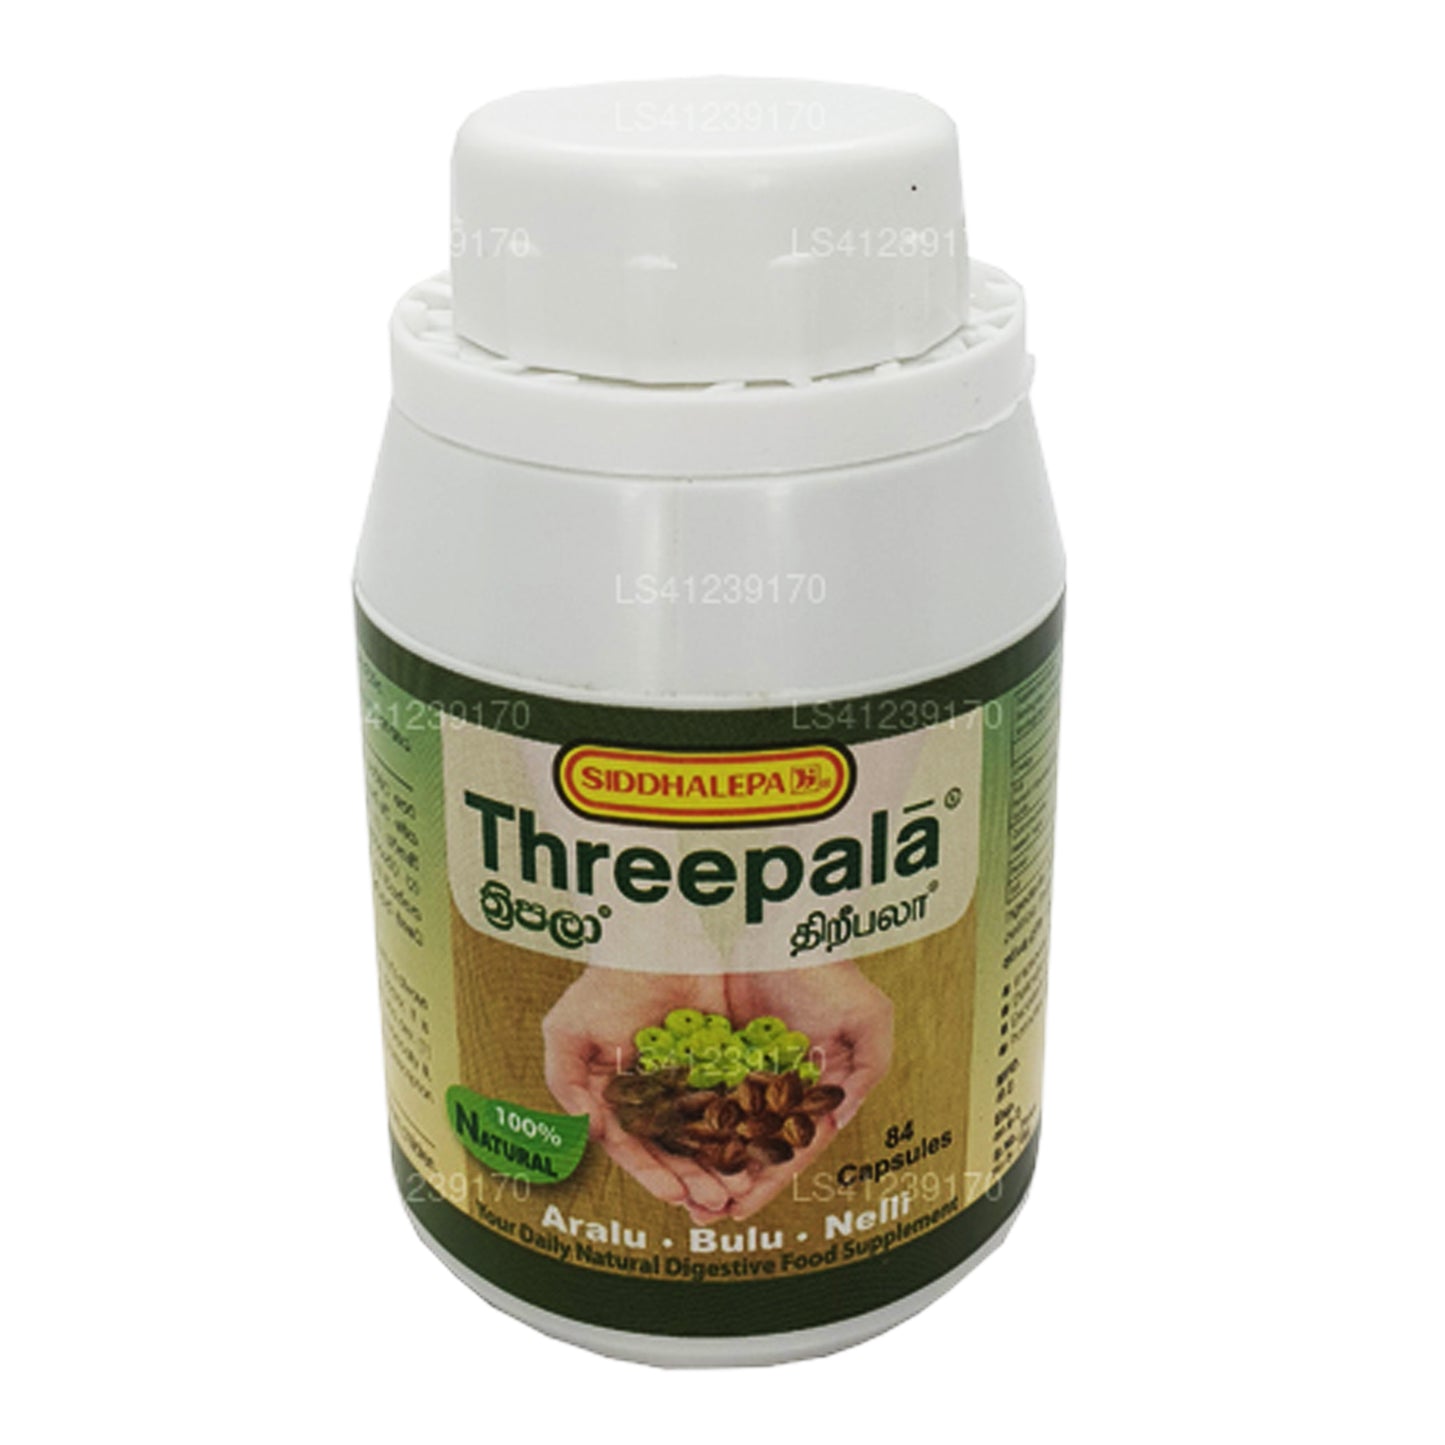 Siddhalepa Threepala (84 capsules)